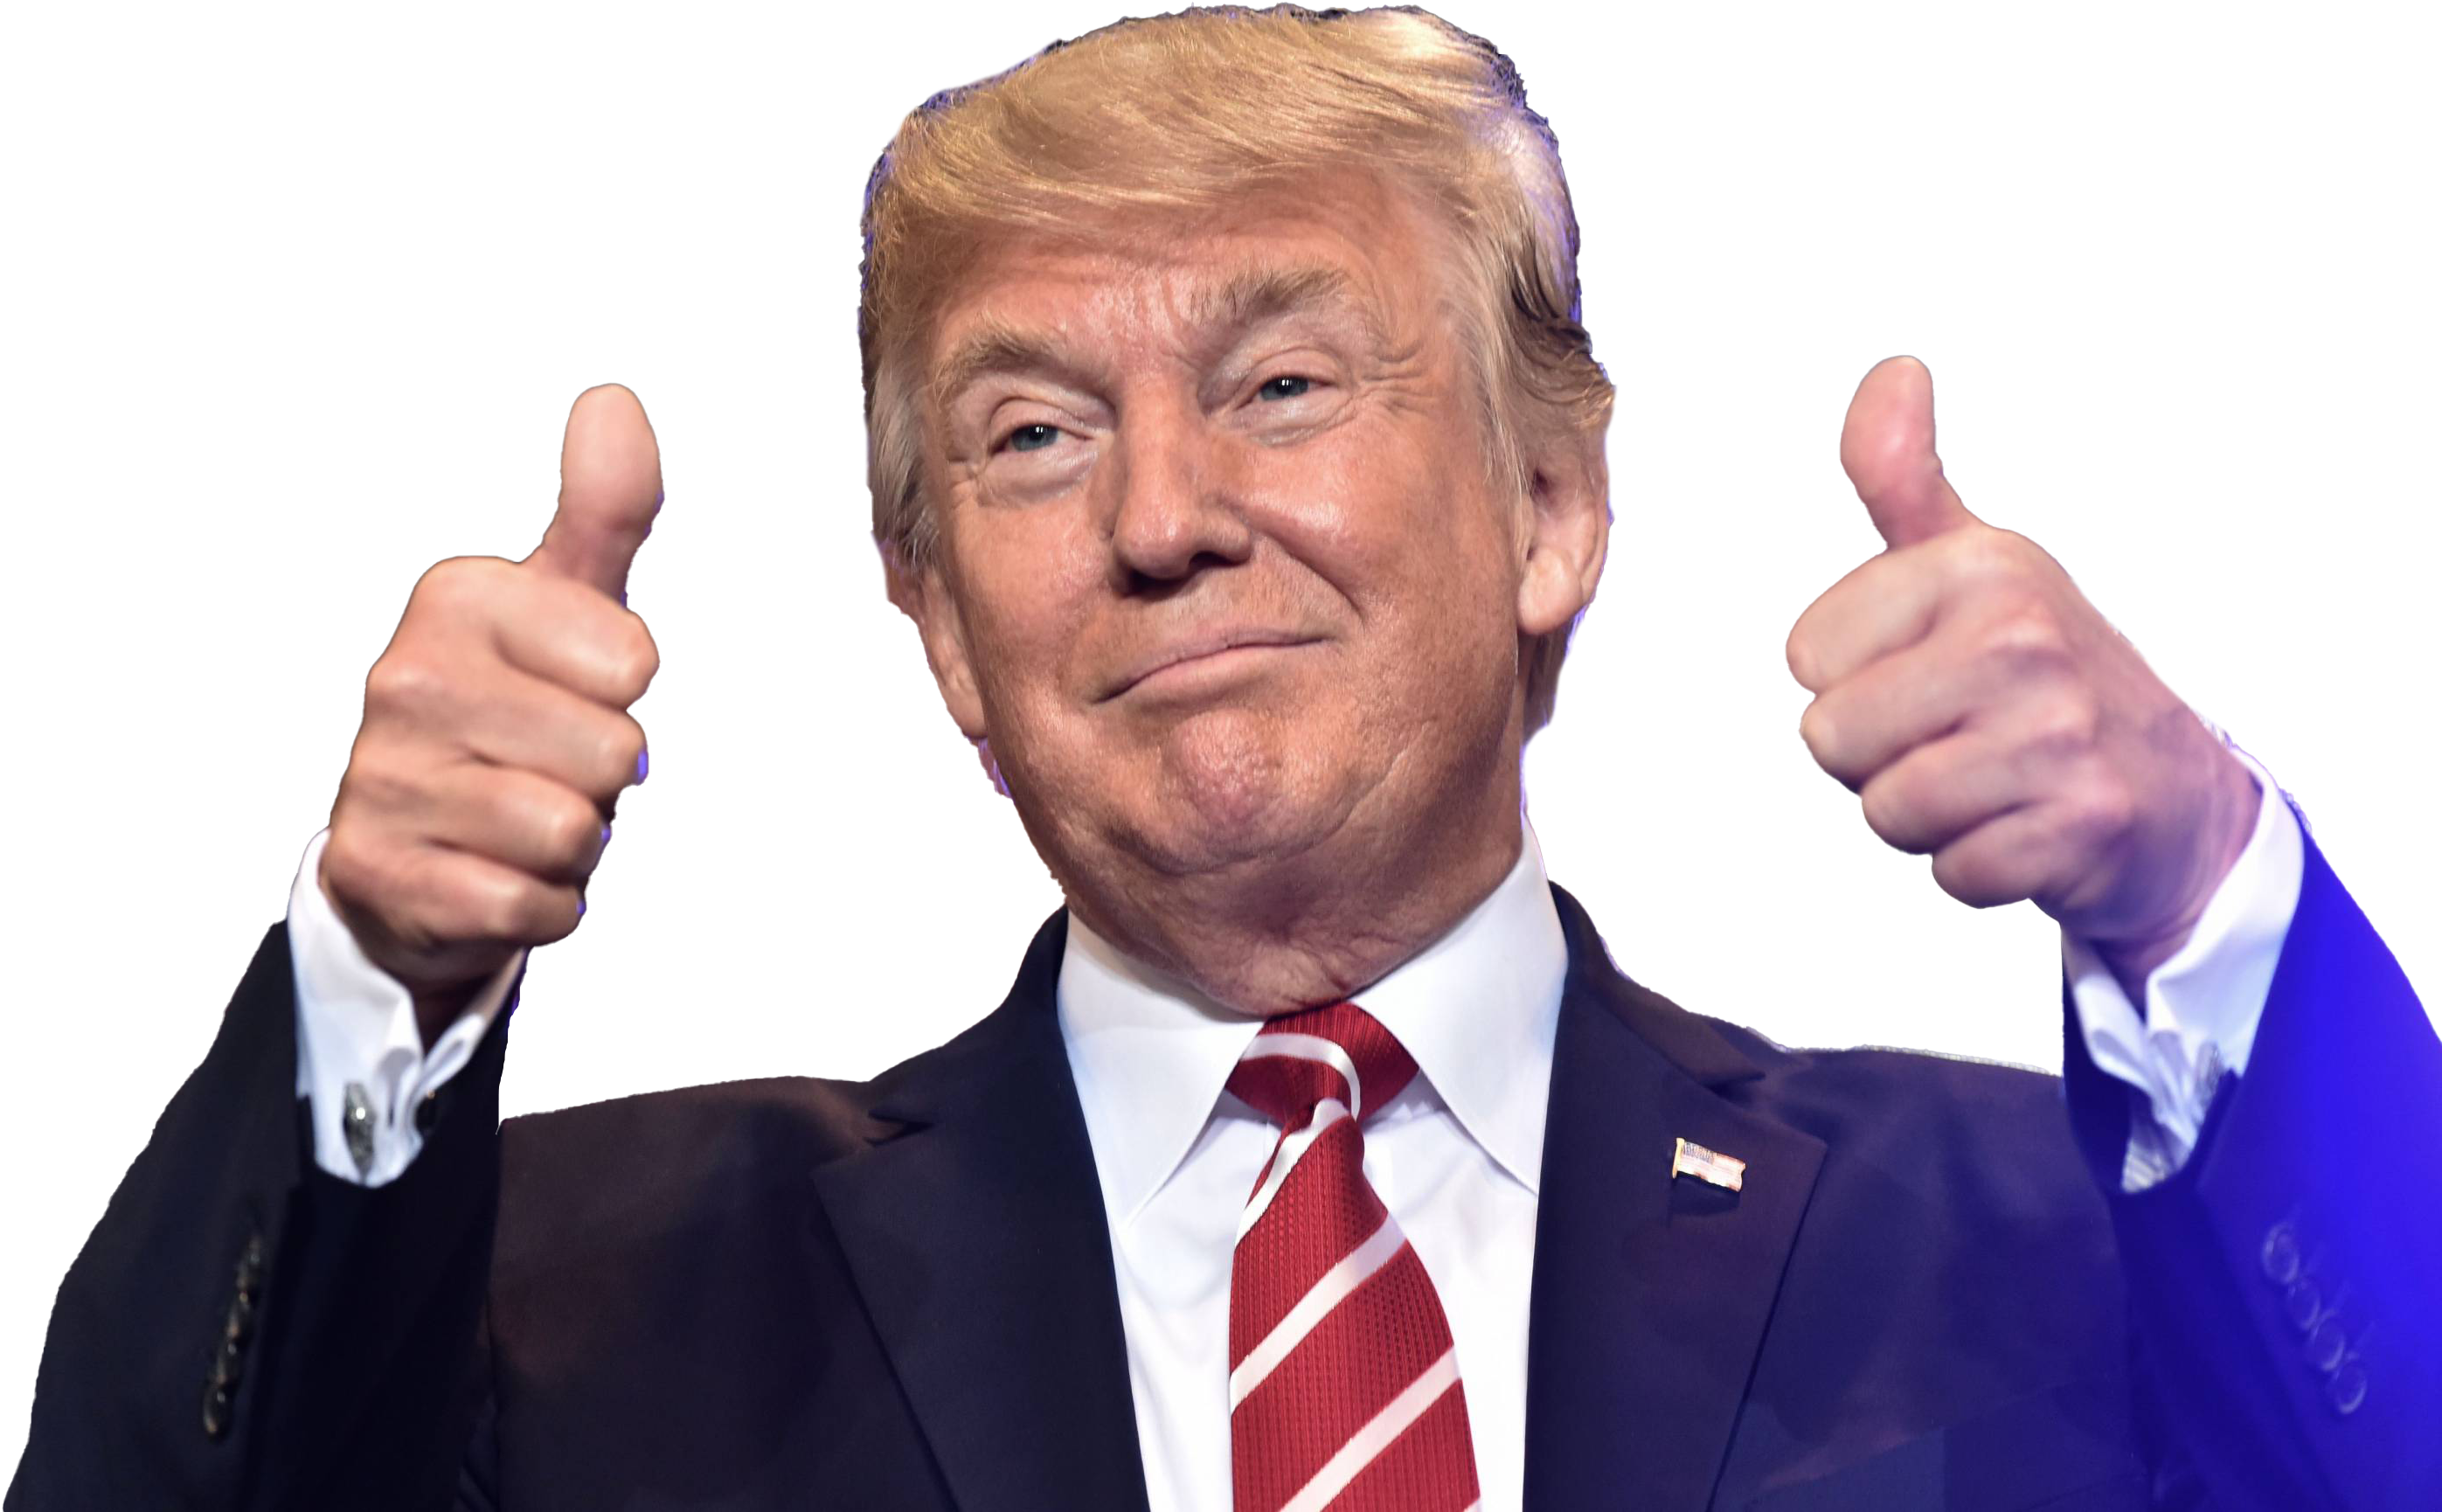 Donald Trump Giving Thumbs Up